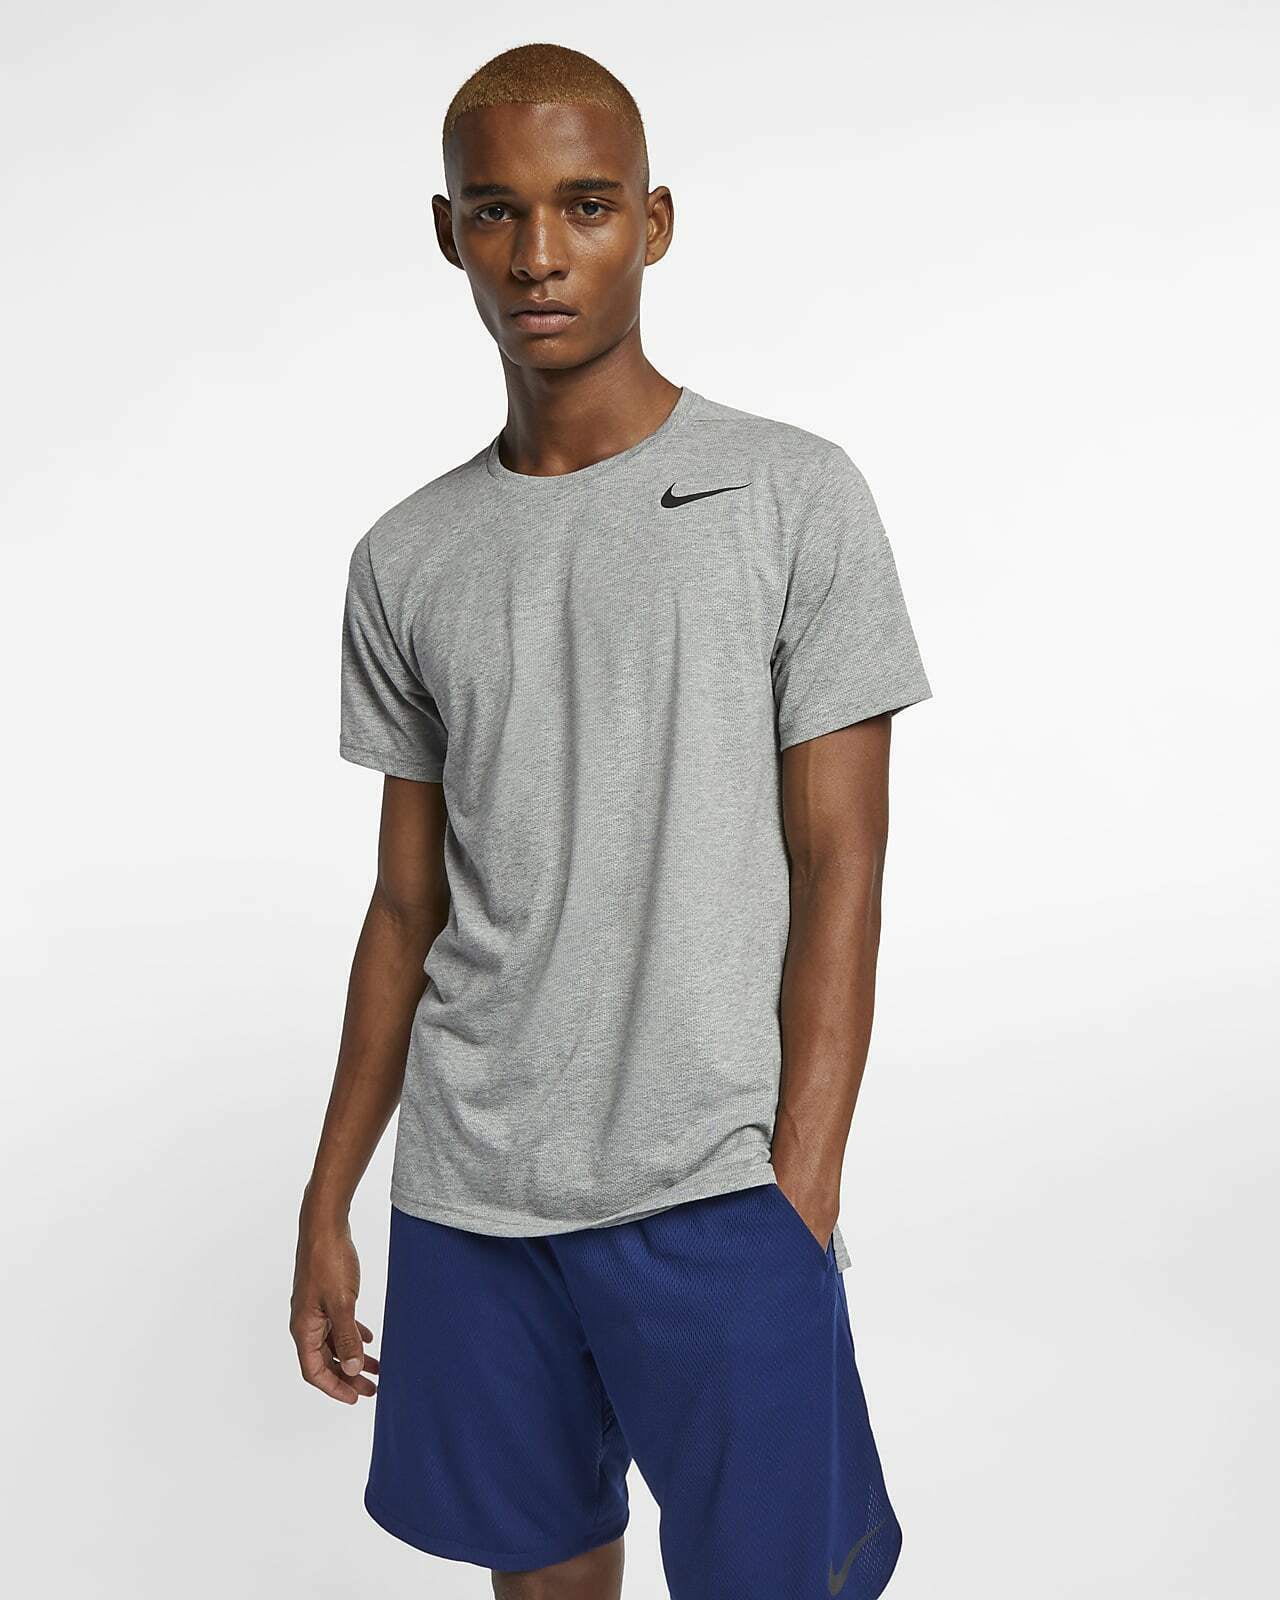 Nike Breathe (Grey ) Men's Running Training T Shirt Size M - Walmart.com